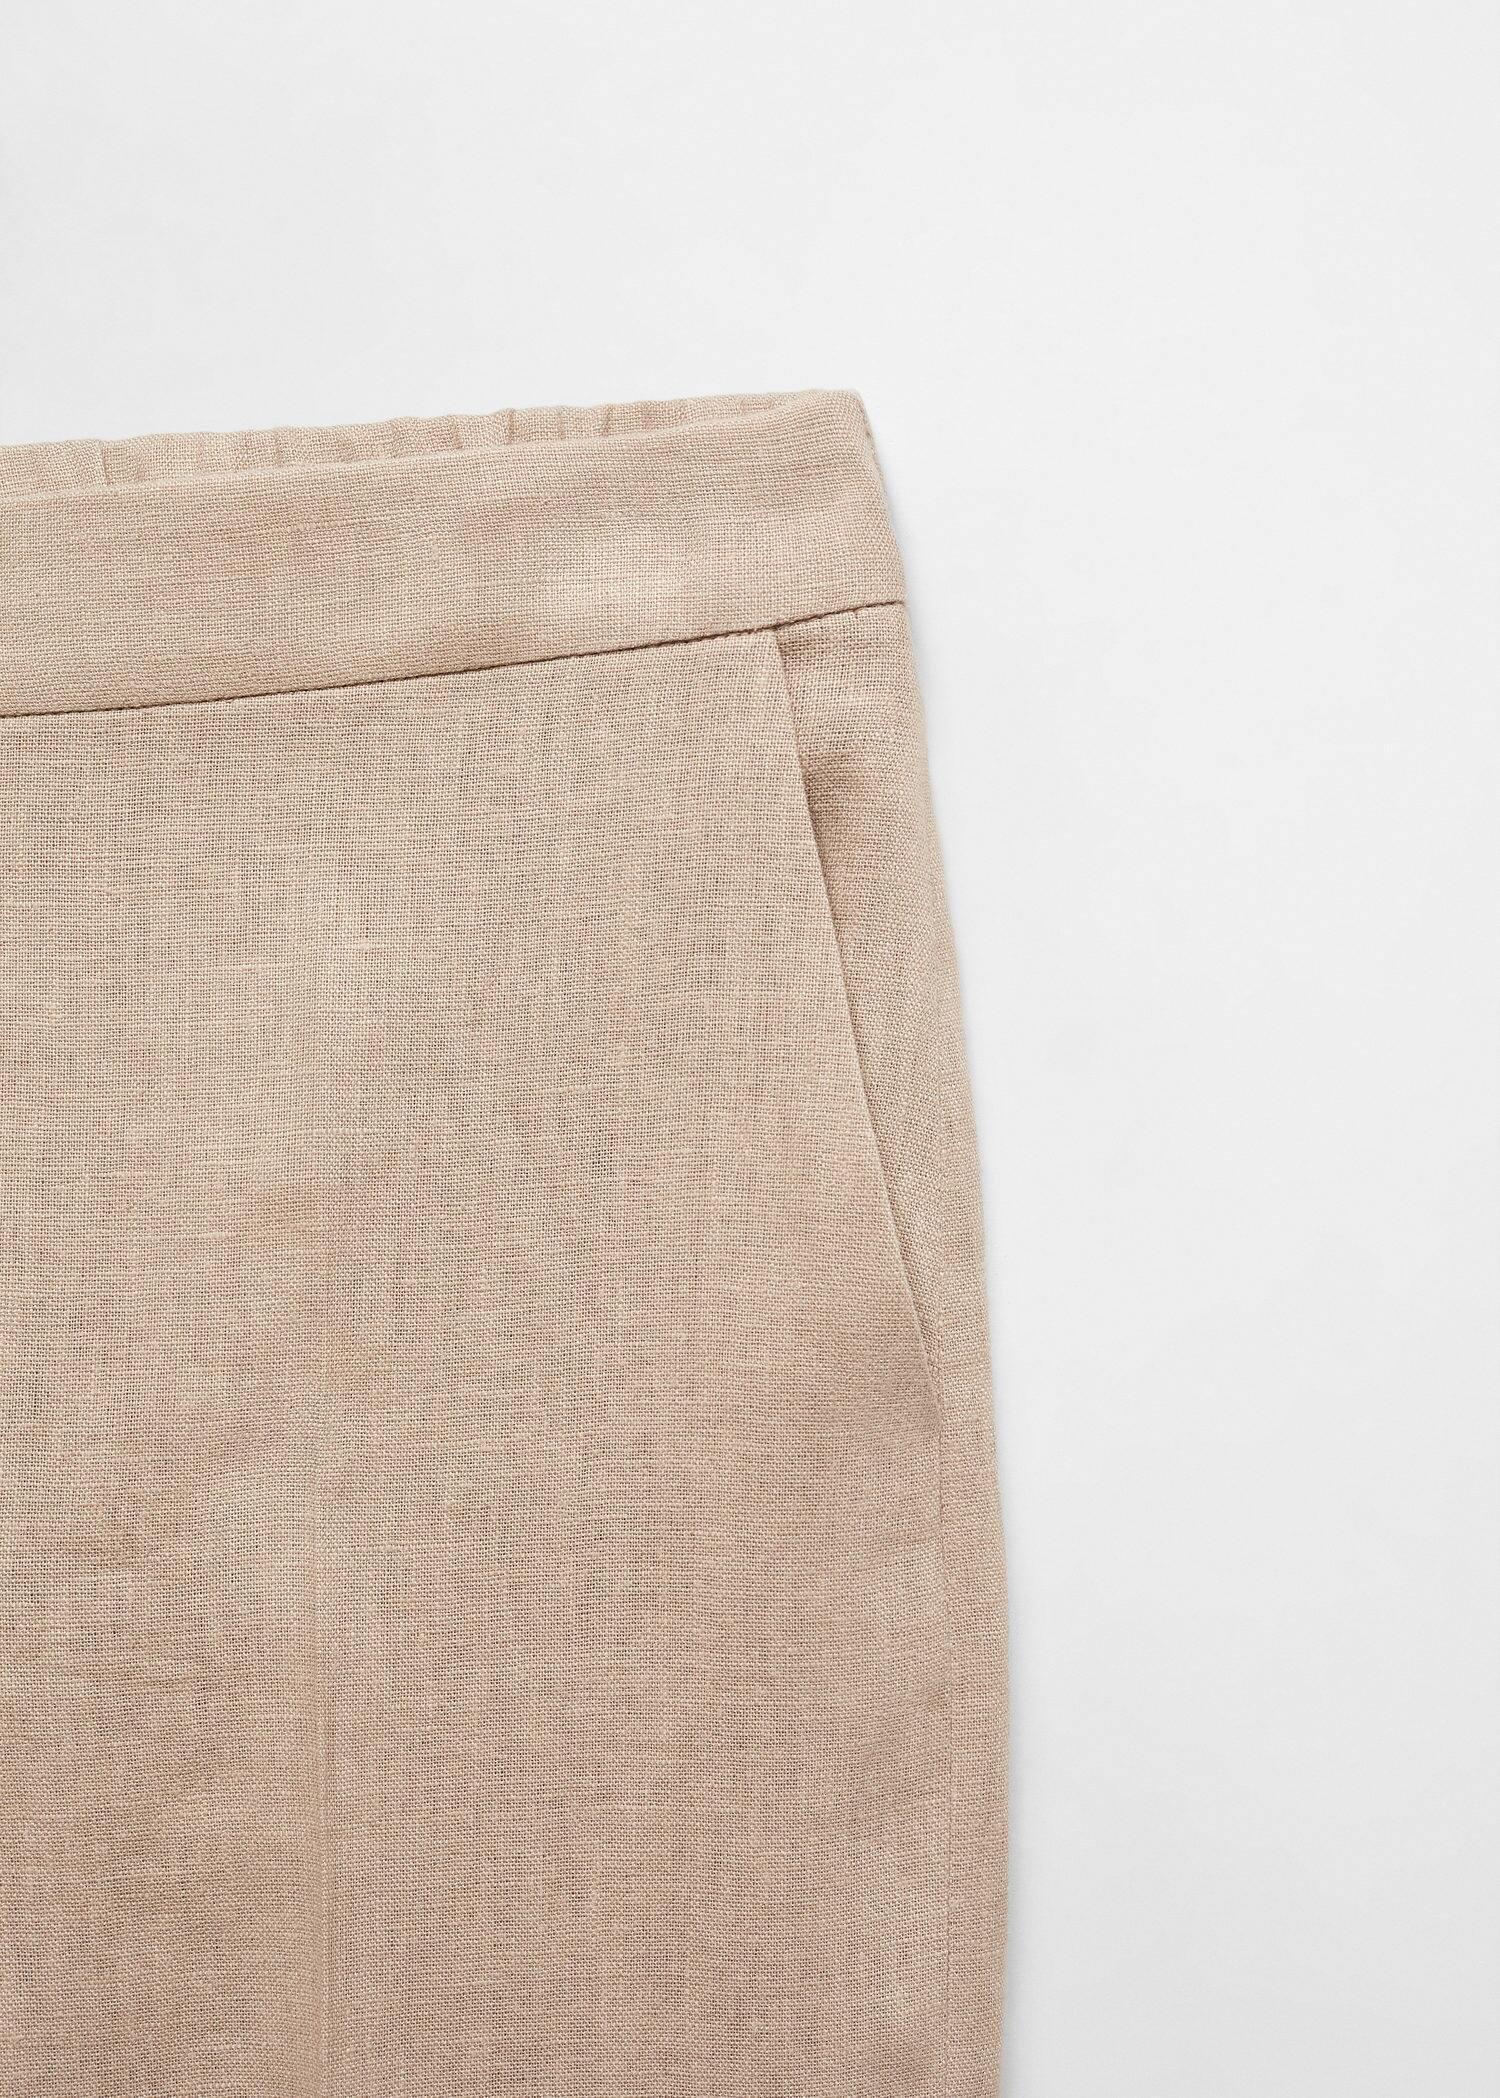 Mango - Grey Lt-Pastel Linen Trousers